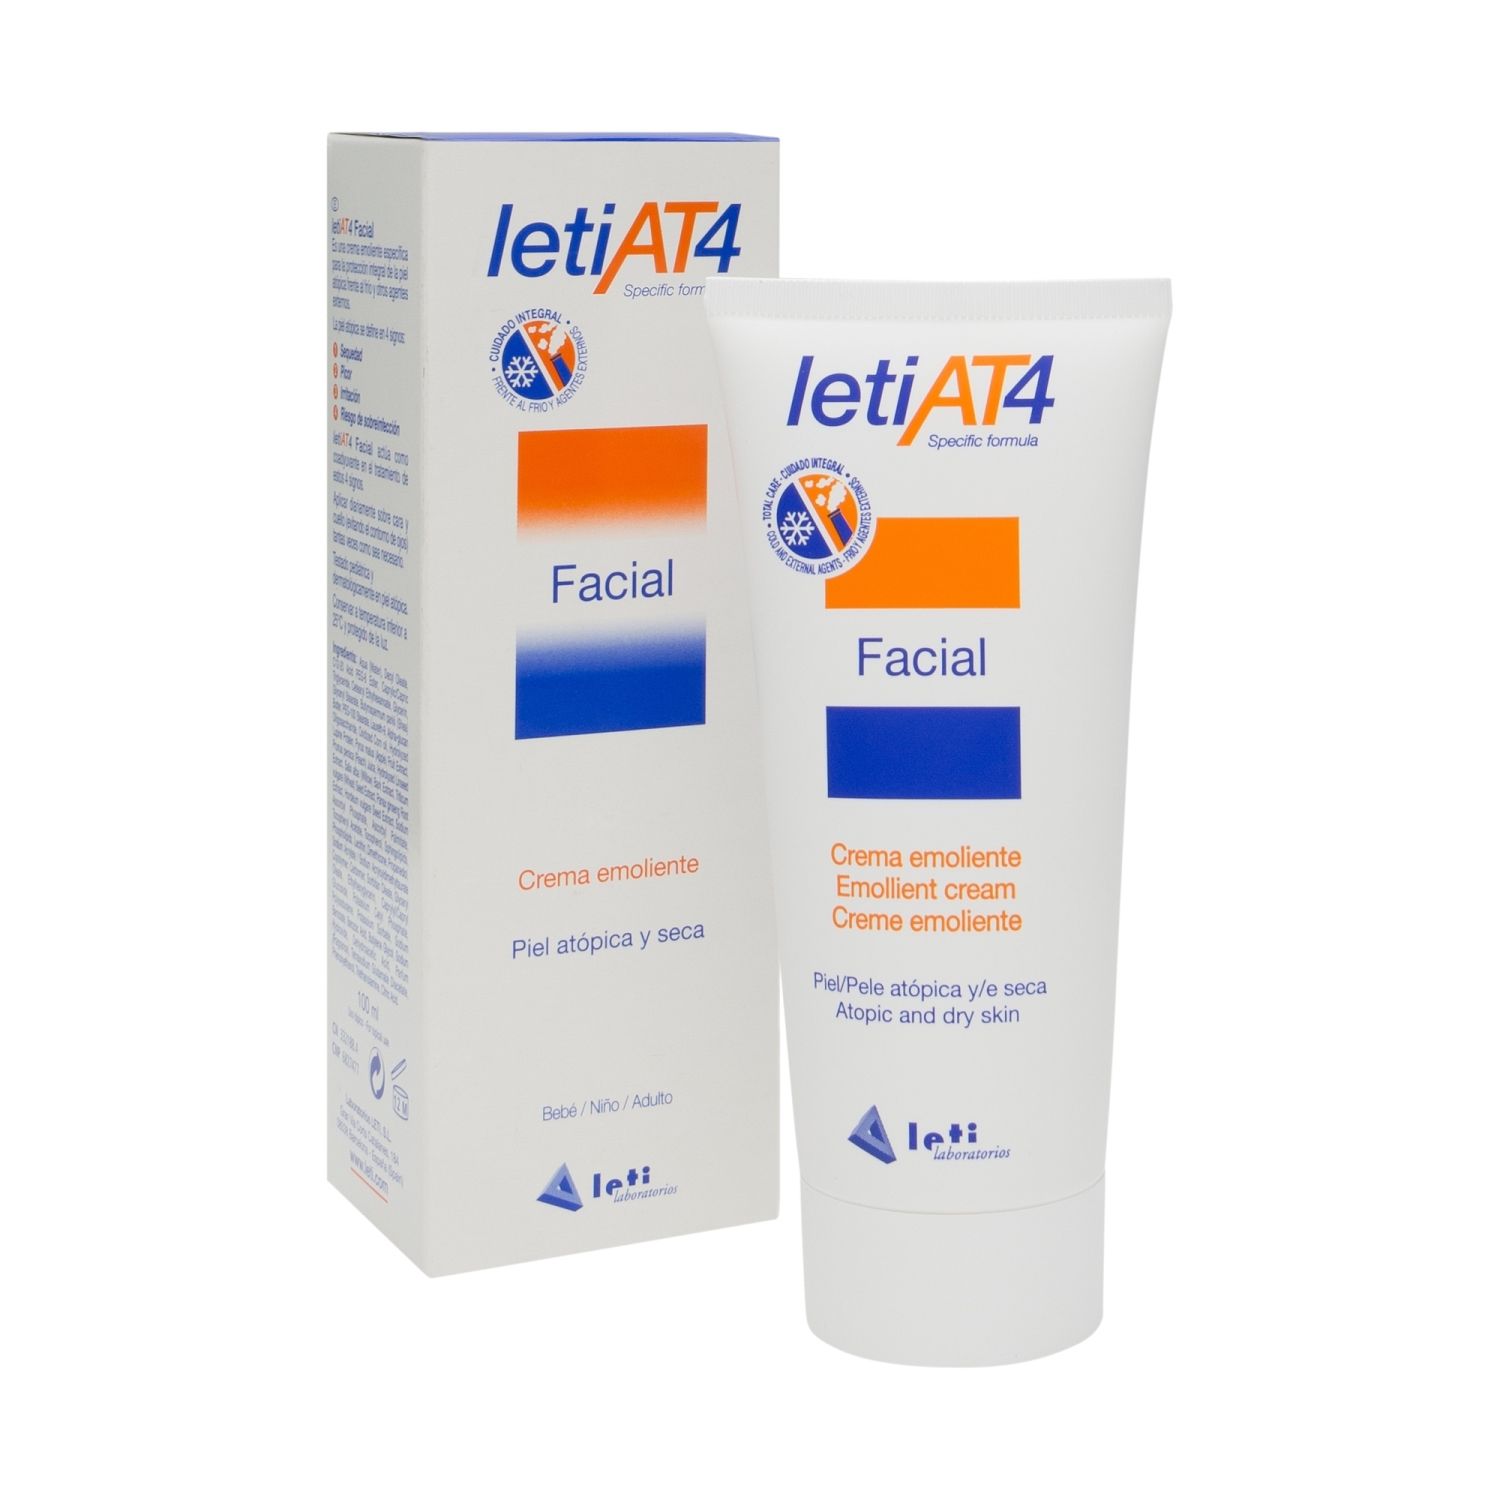 letiat4 crema facial 100ml